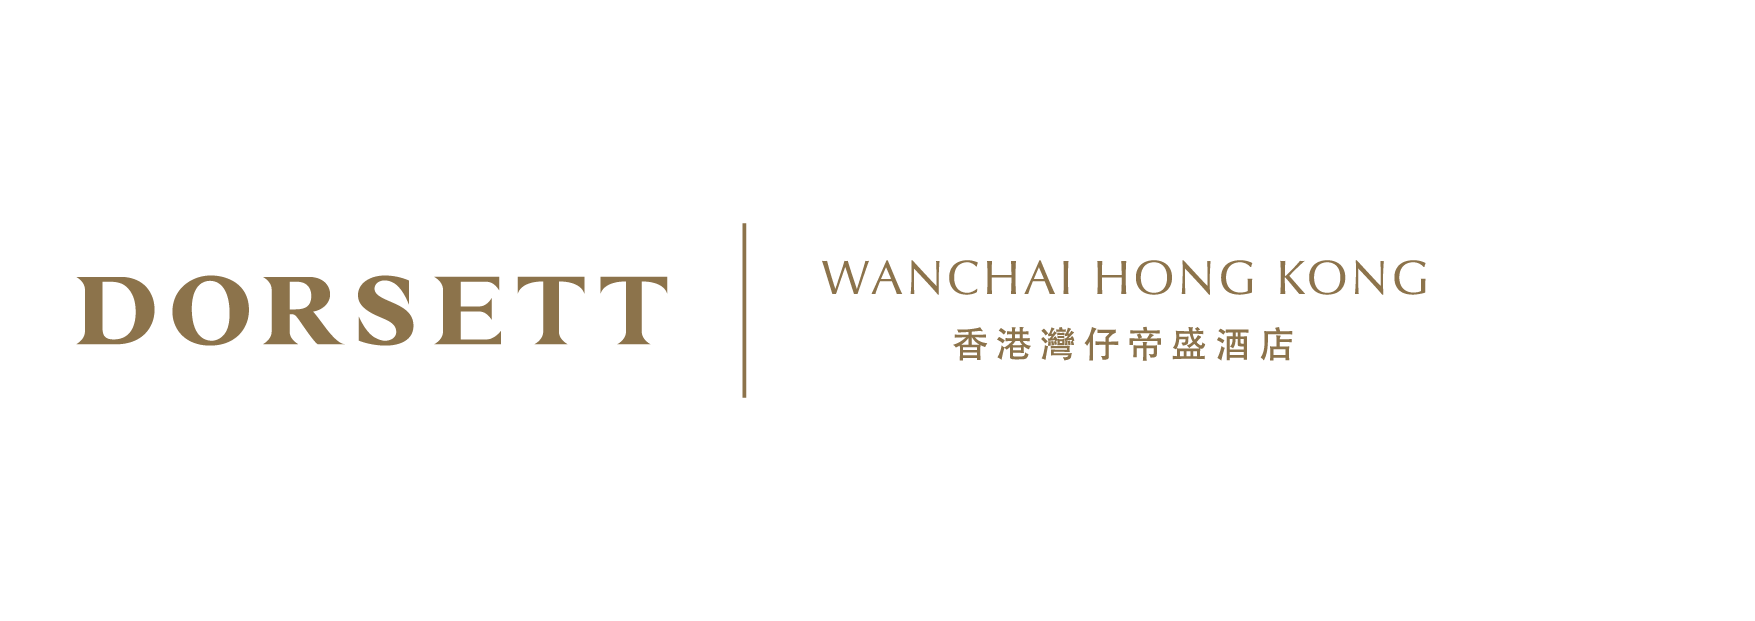 Dorsett Wanchai